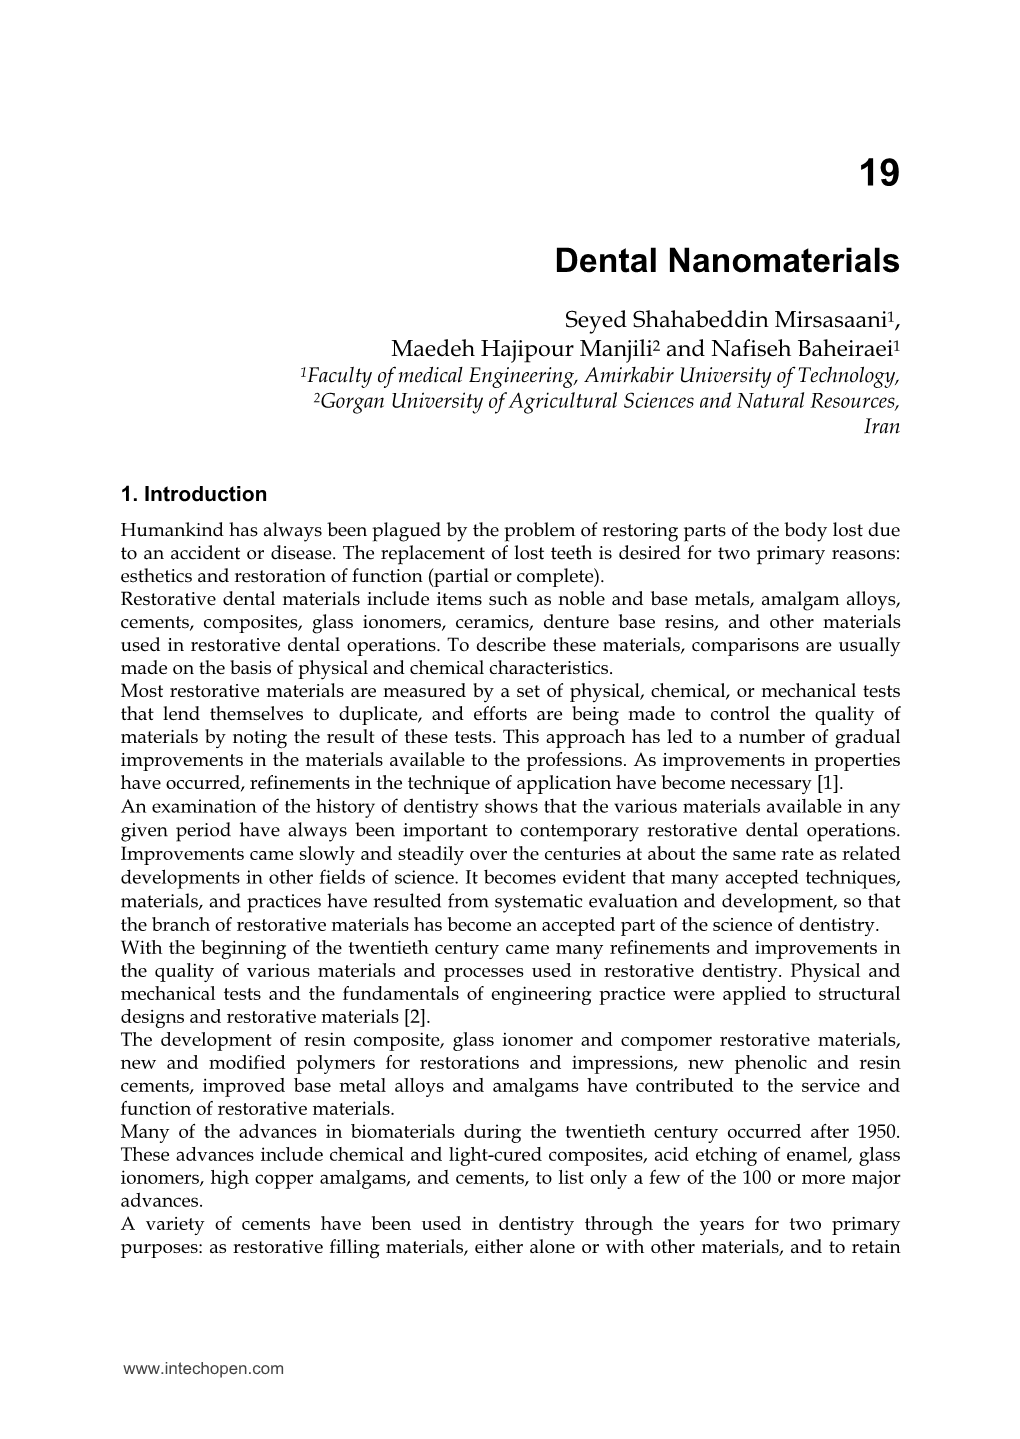 Dental Nanomaterials